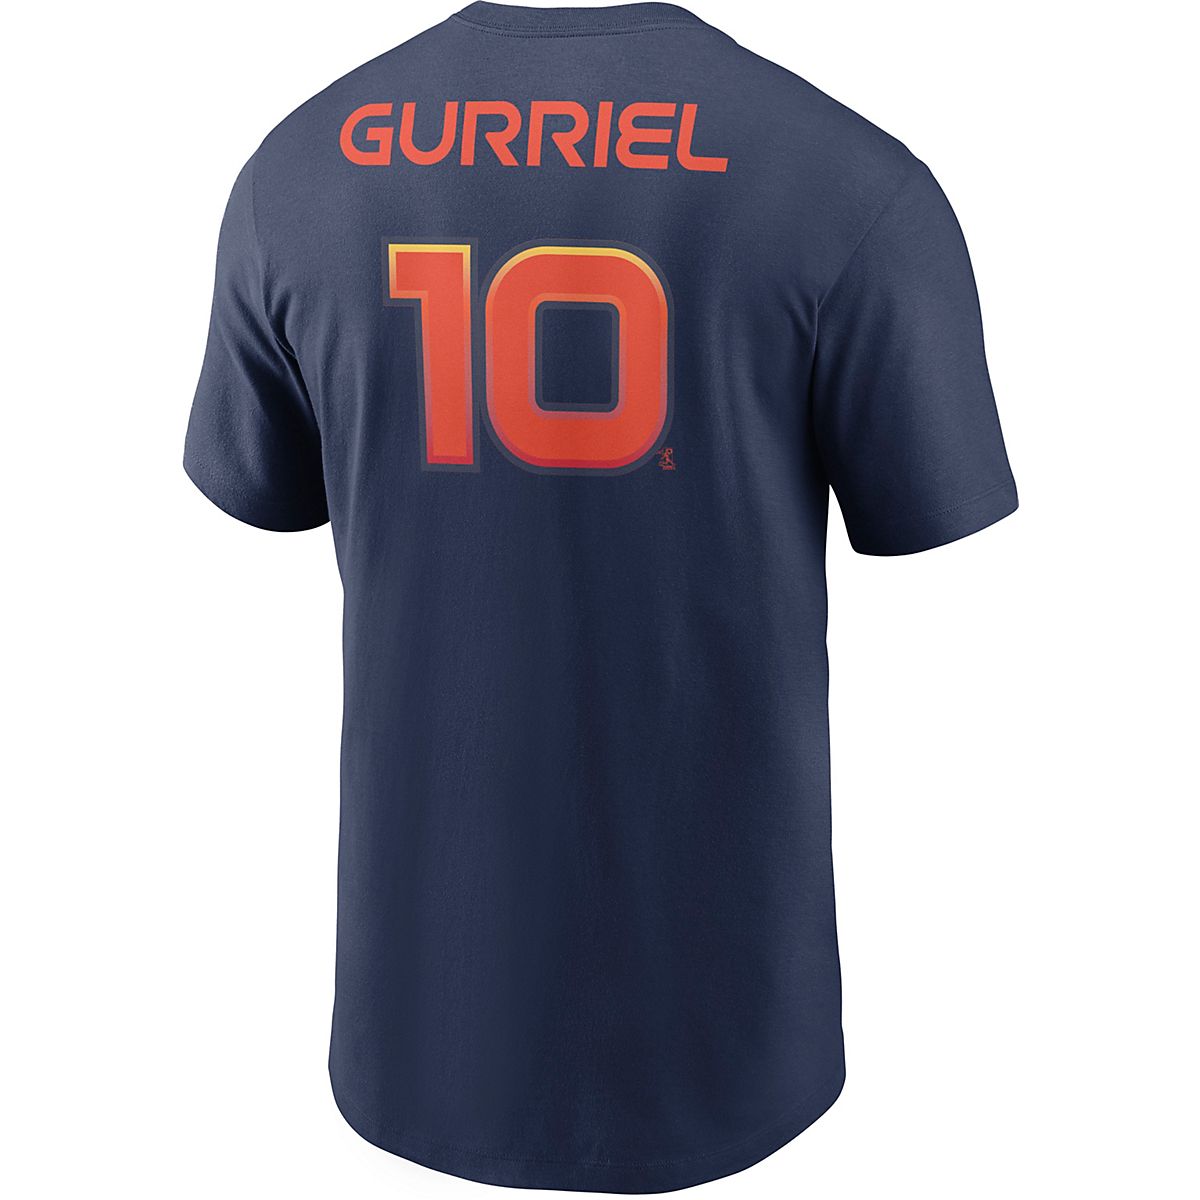 Official Yuli Gurriel Jersey, Yuli Gurriel Shirts, Baseball Apparel, Yuli  Gurriel Gear